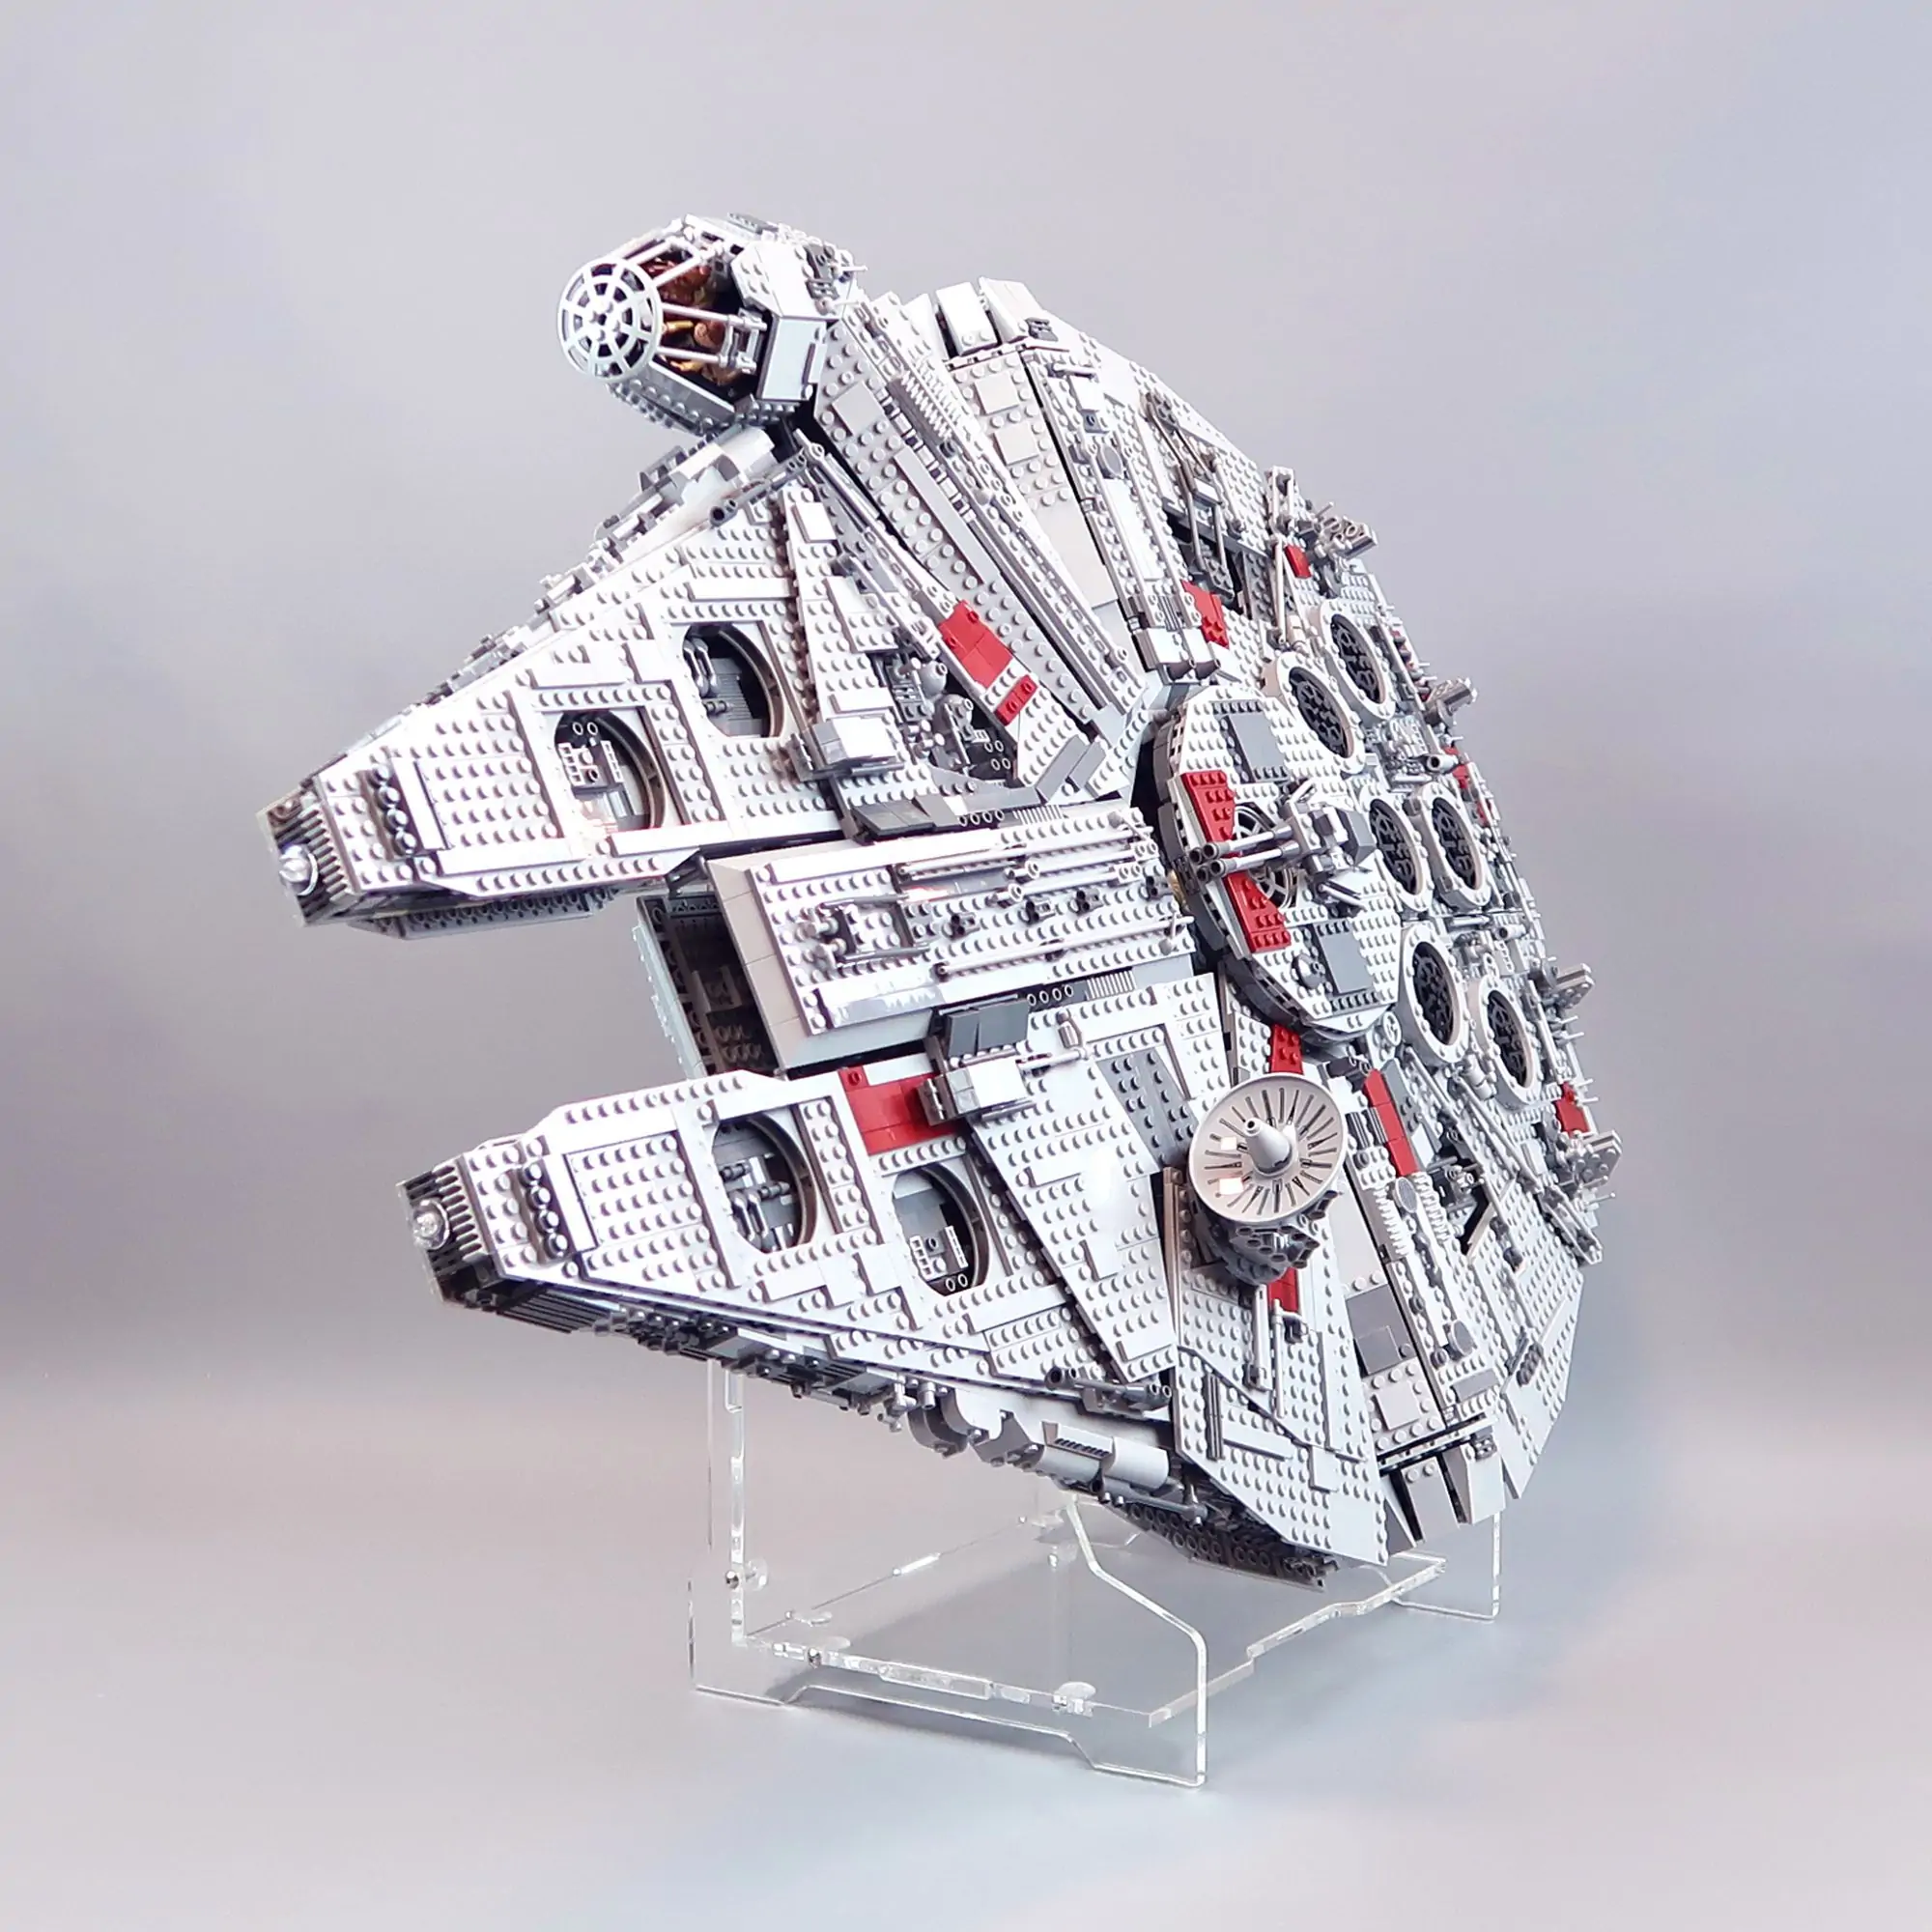 Lego 10179 Millenium Falcon UCS - Lego Star Wars Ultimate